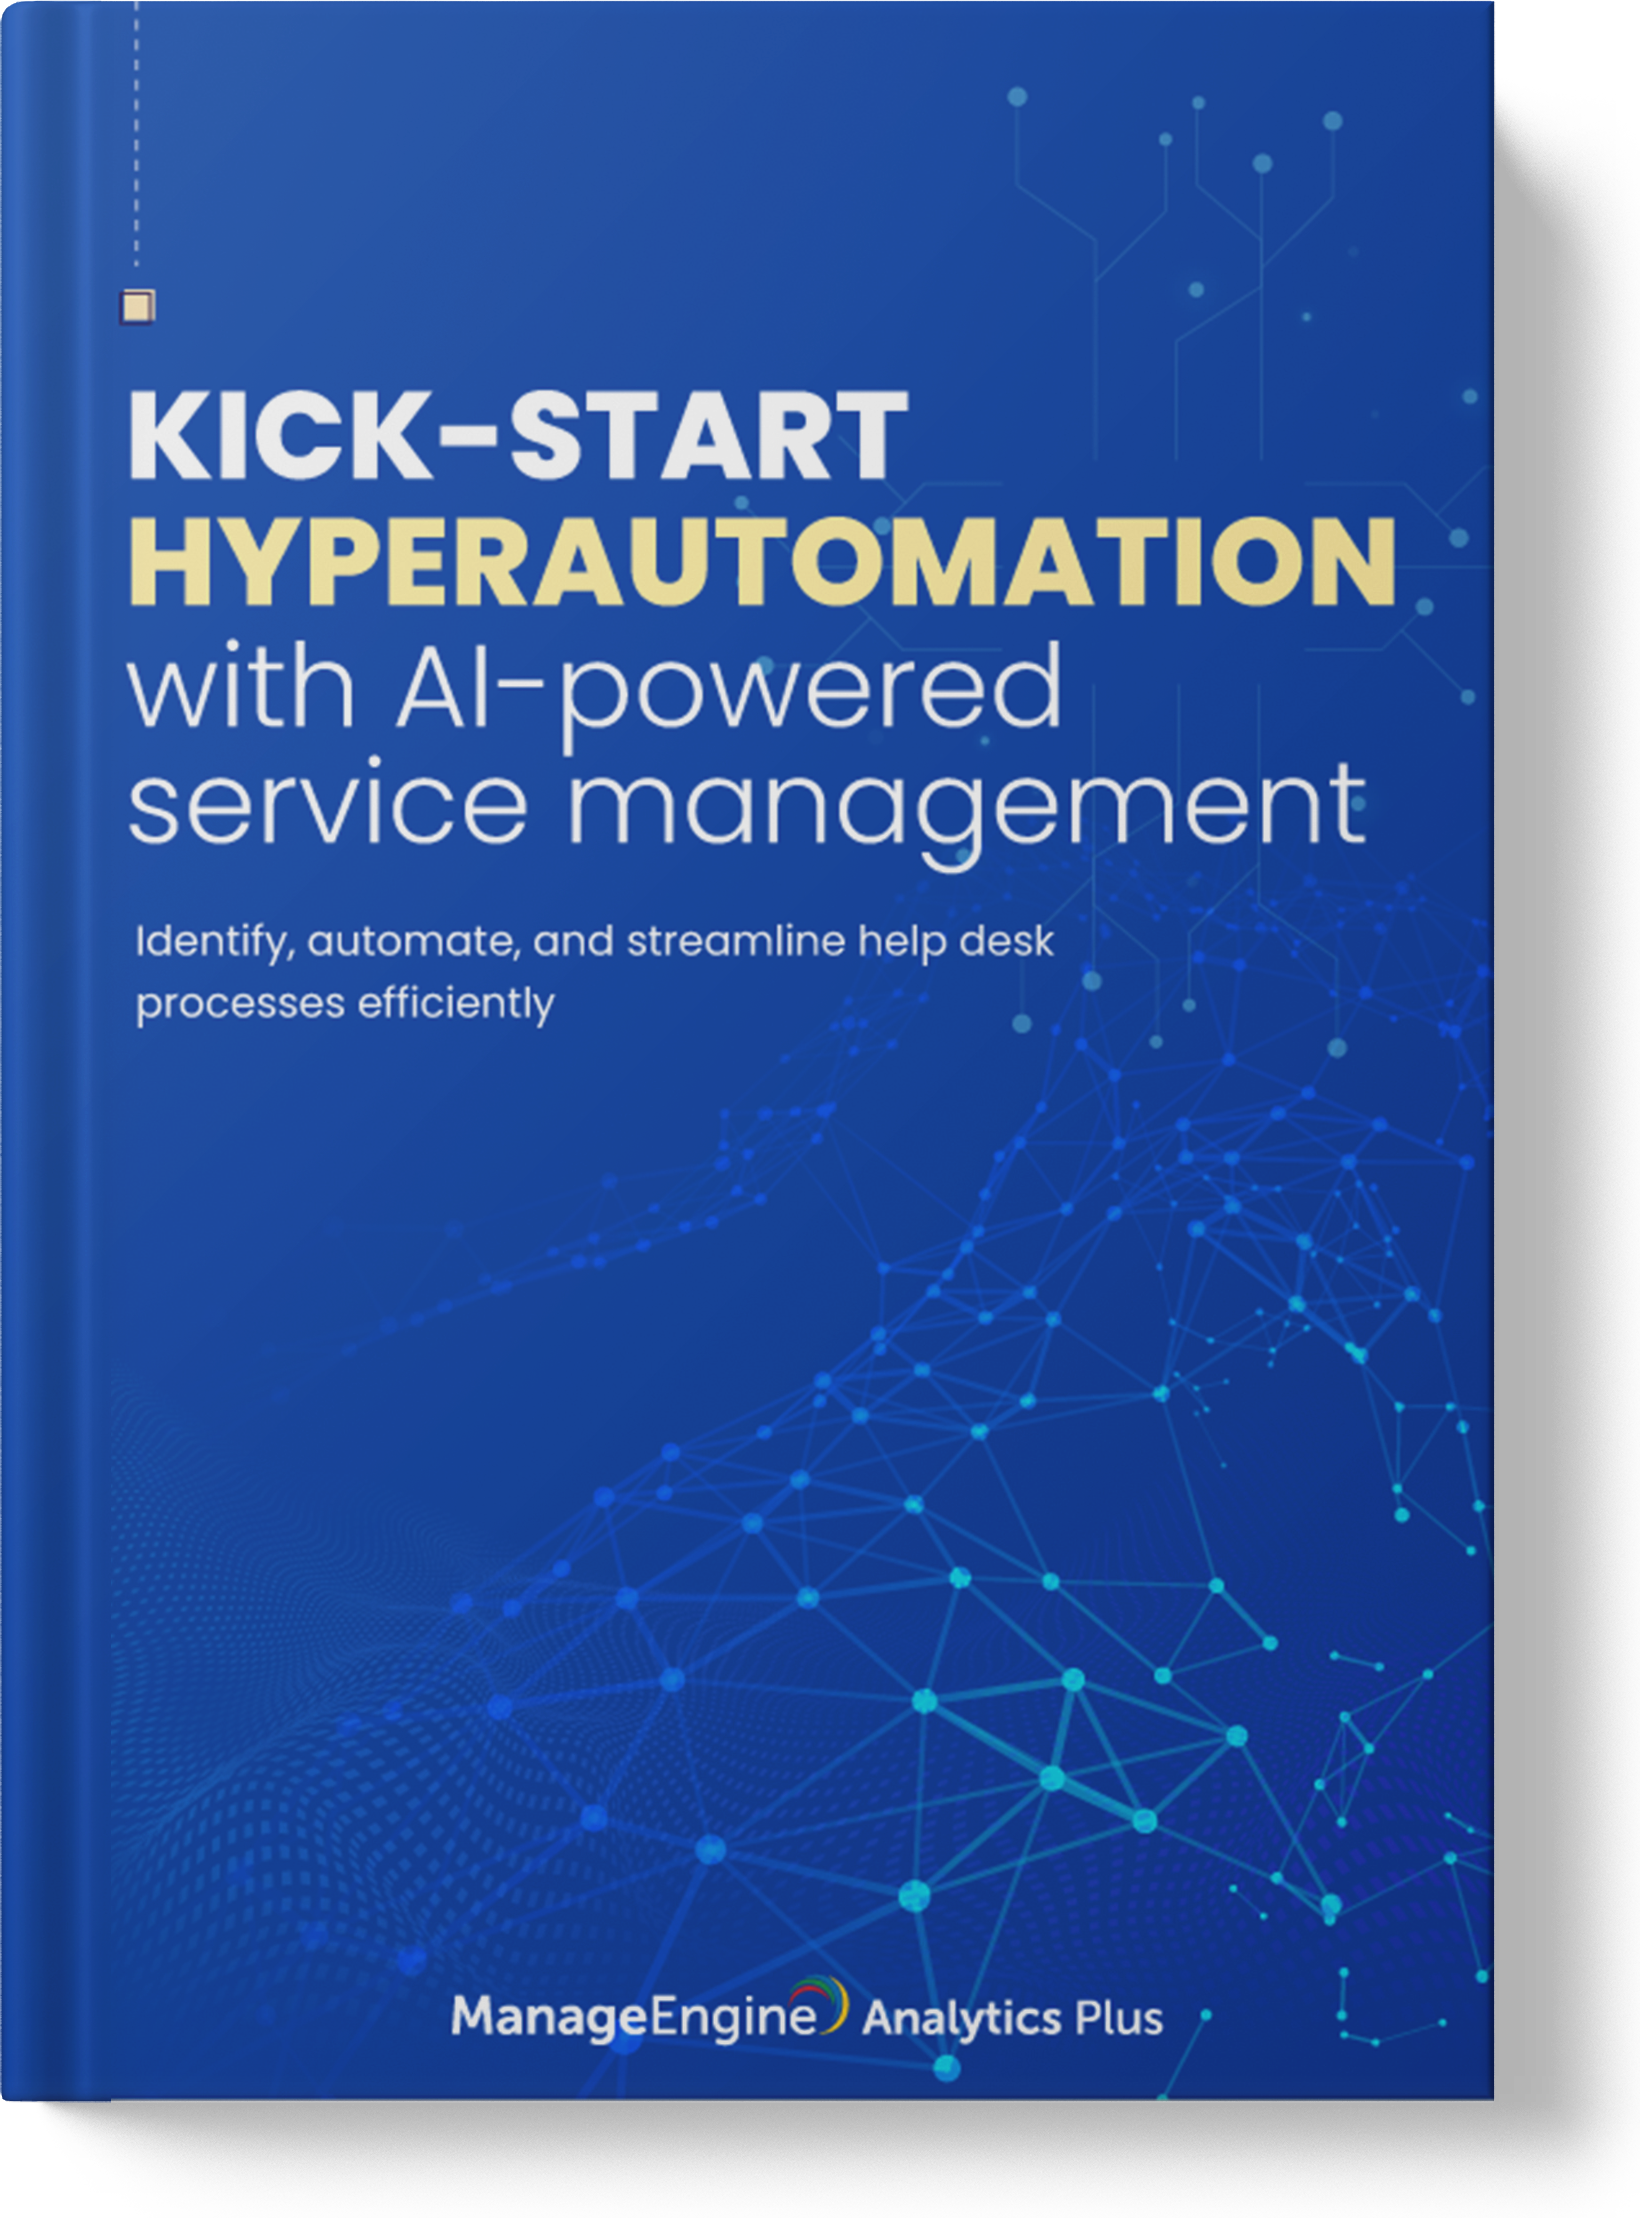 Kick-start hyperautomation with AI-powered service management